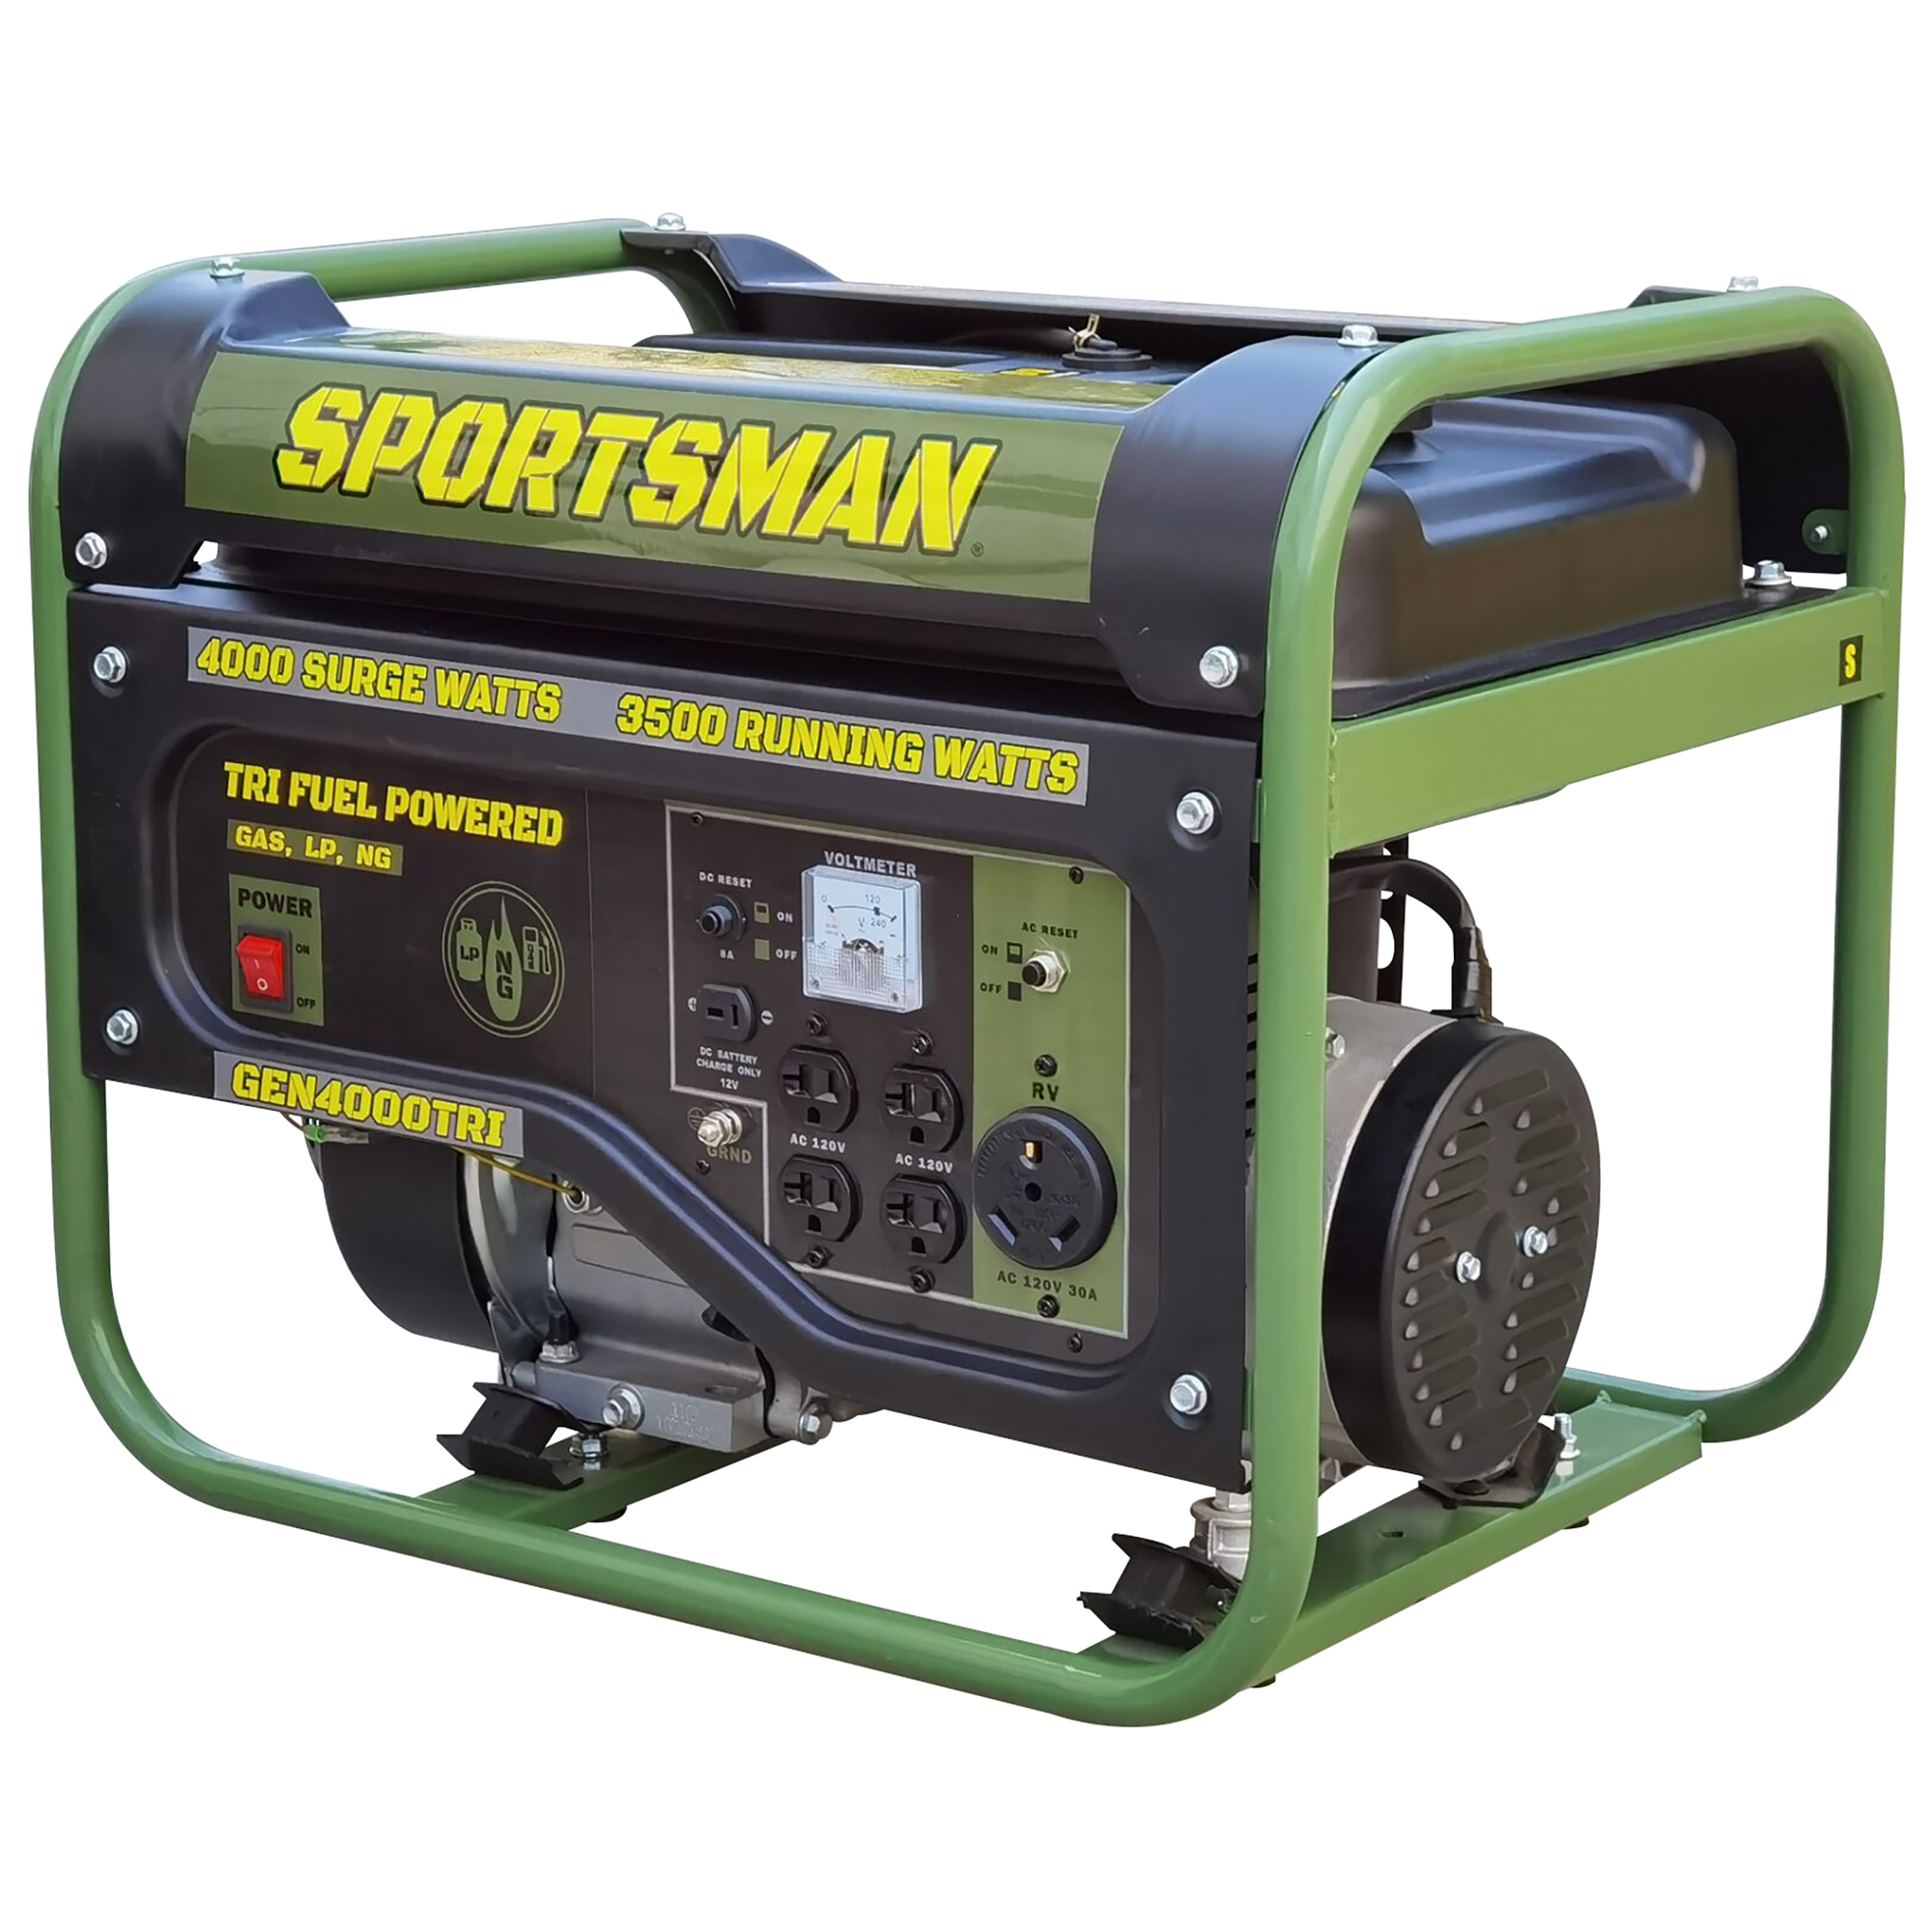 Sportsman, 4000 Surge Watts Portable Tri Fuel Generator, Voltage 120 Model GEN4000TRI